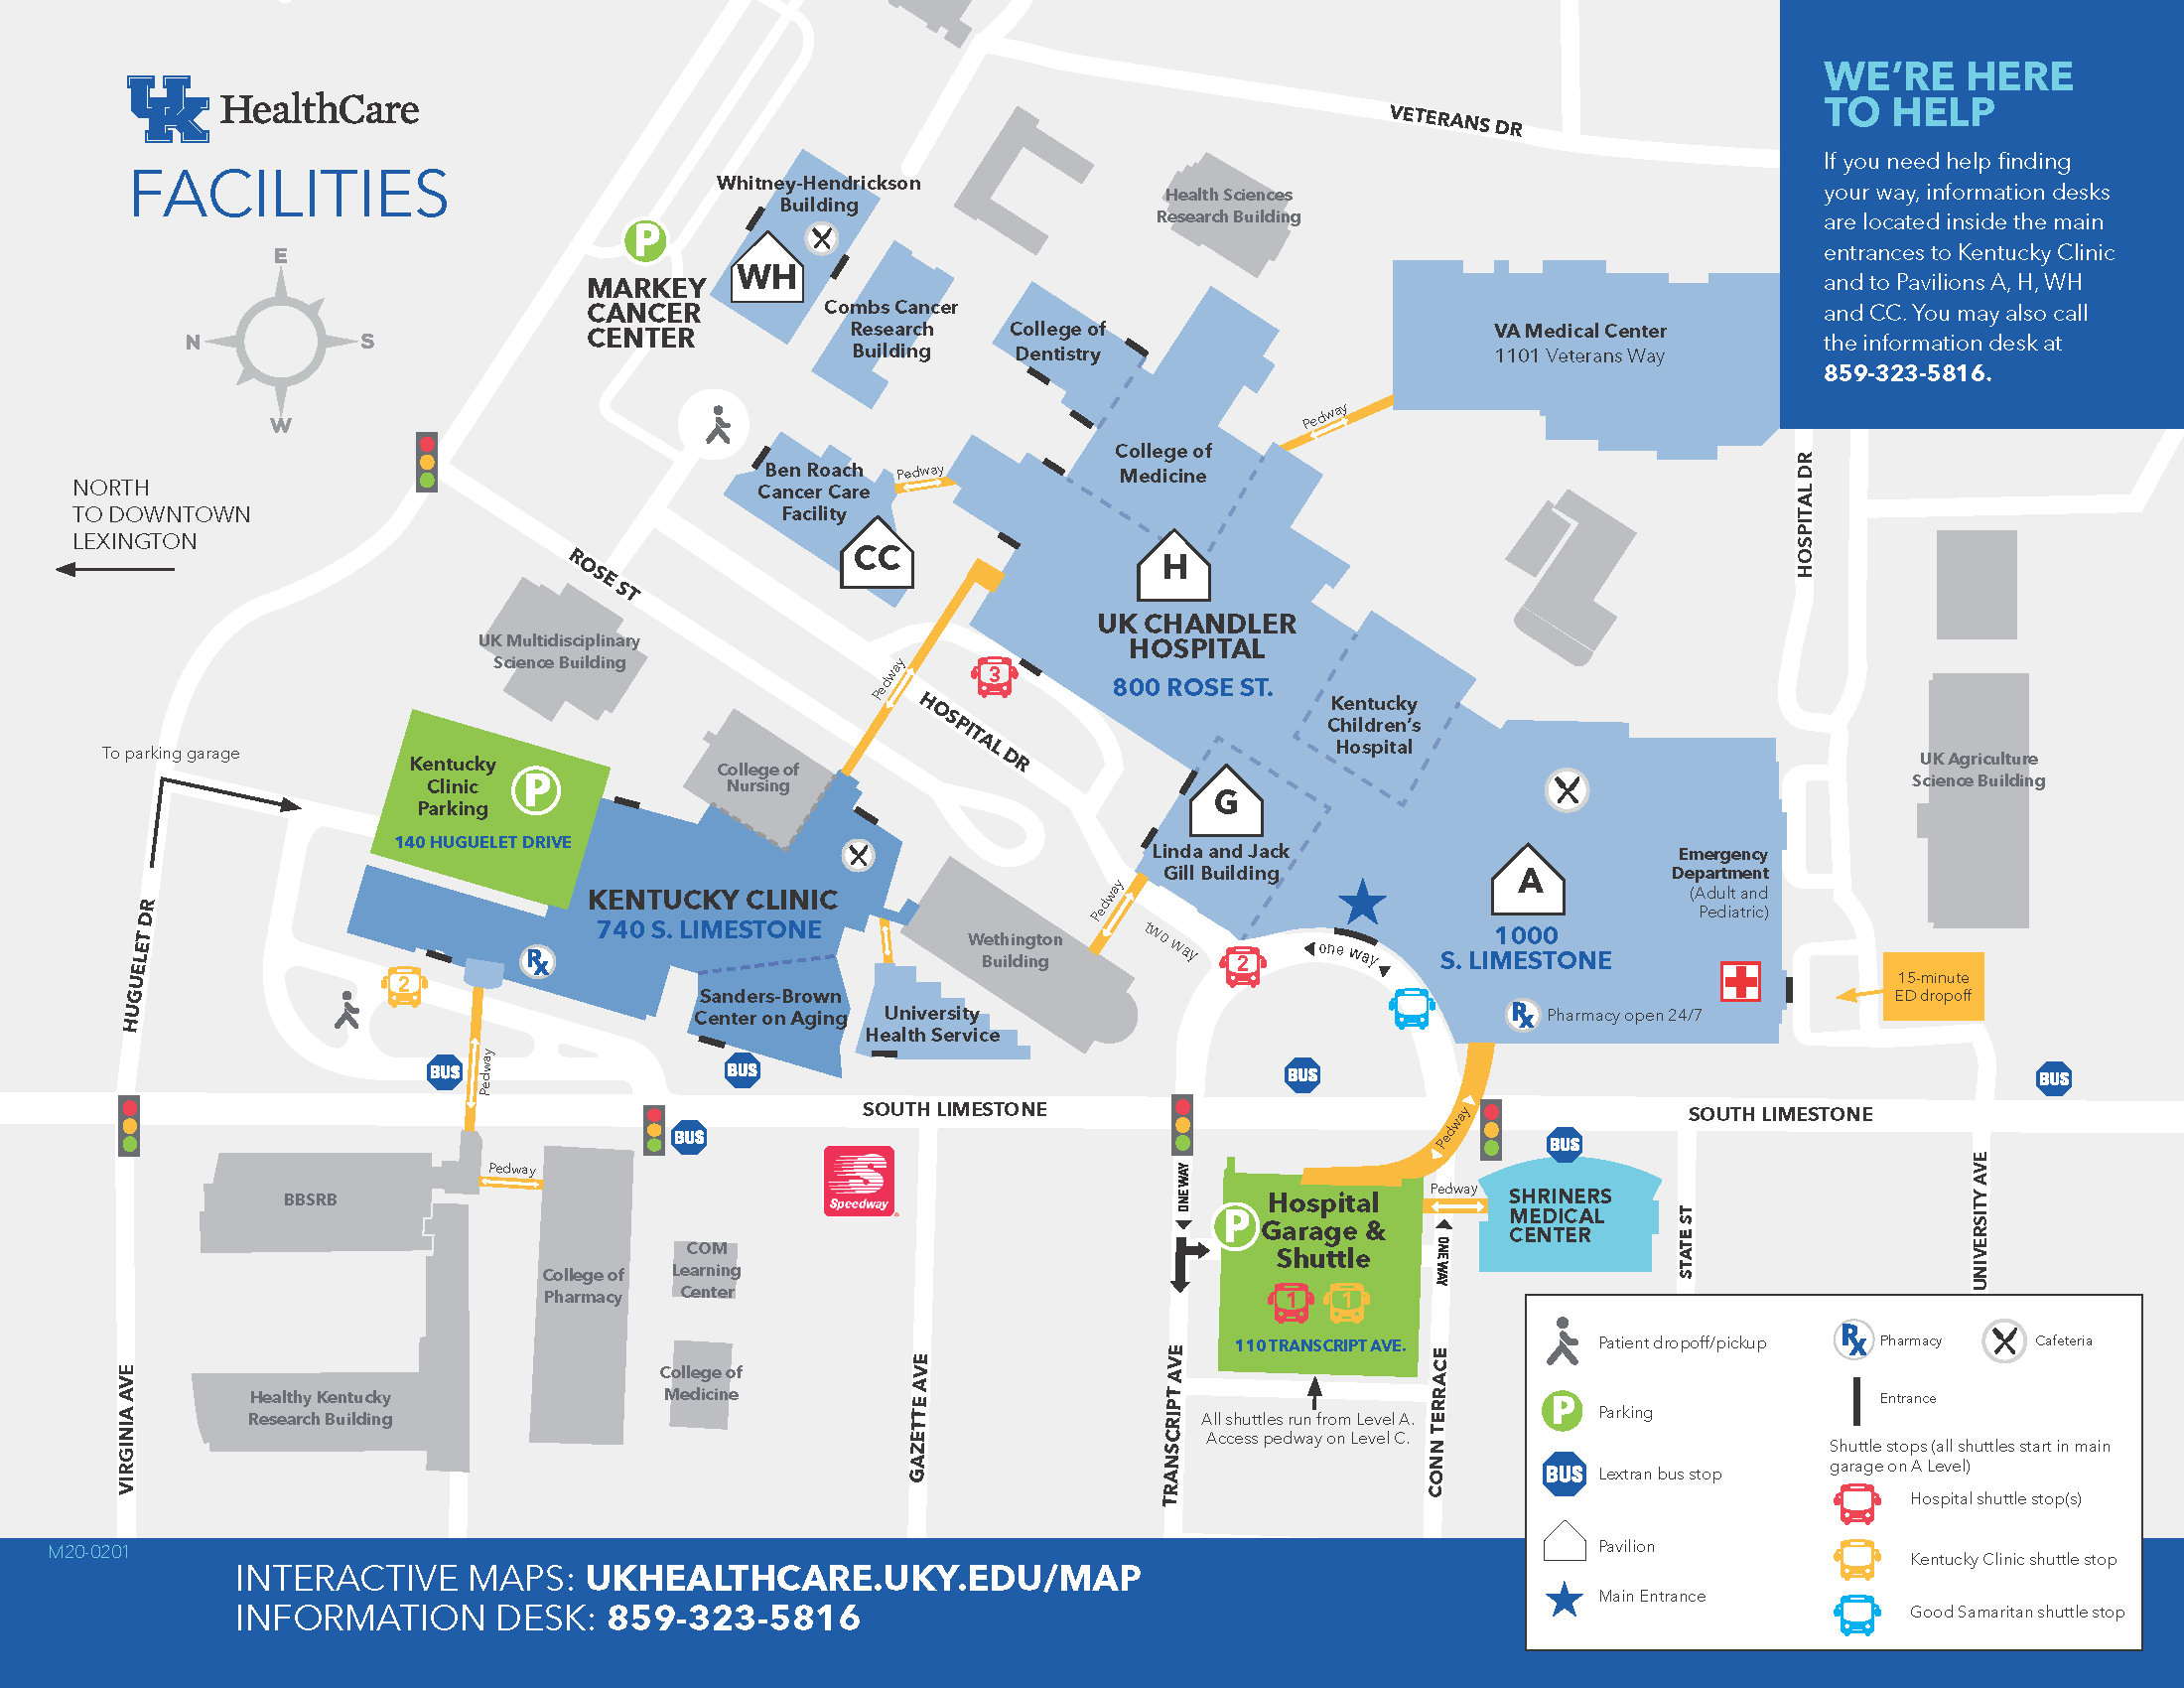 Map of UK HealthCare main campus facilities